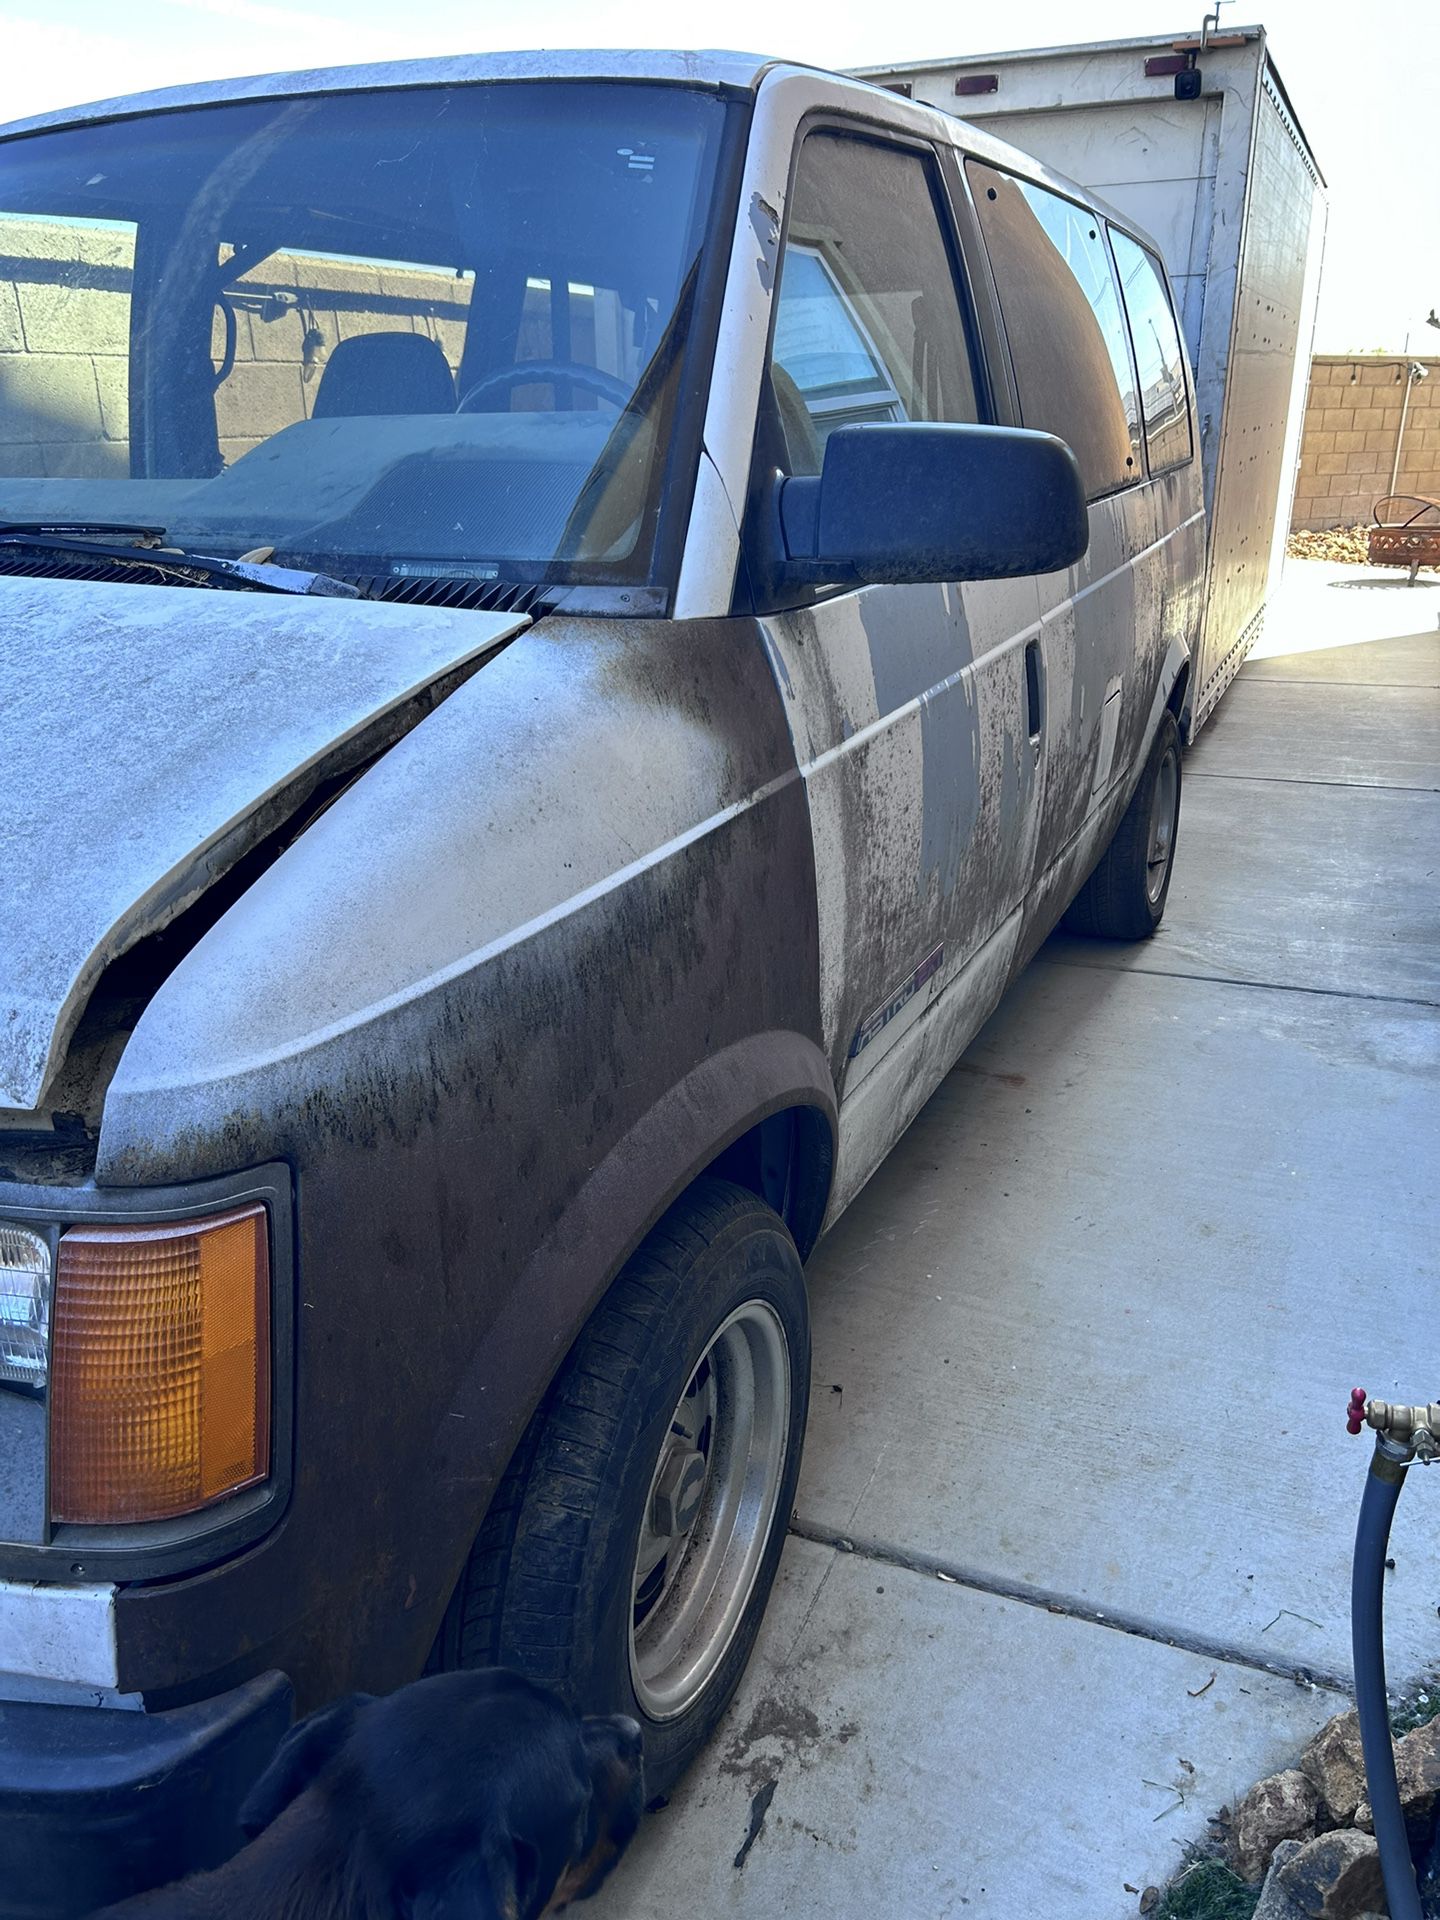 92 Chevy Astro Ext Van For Parts